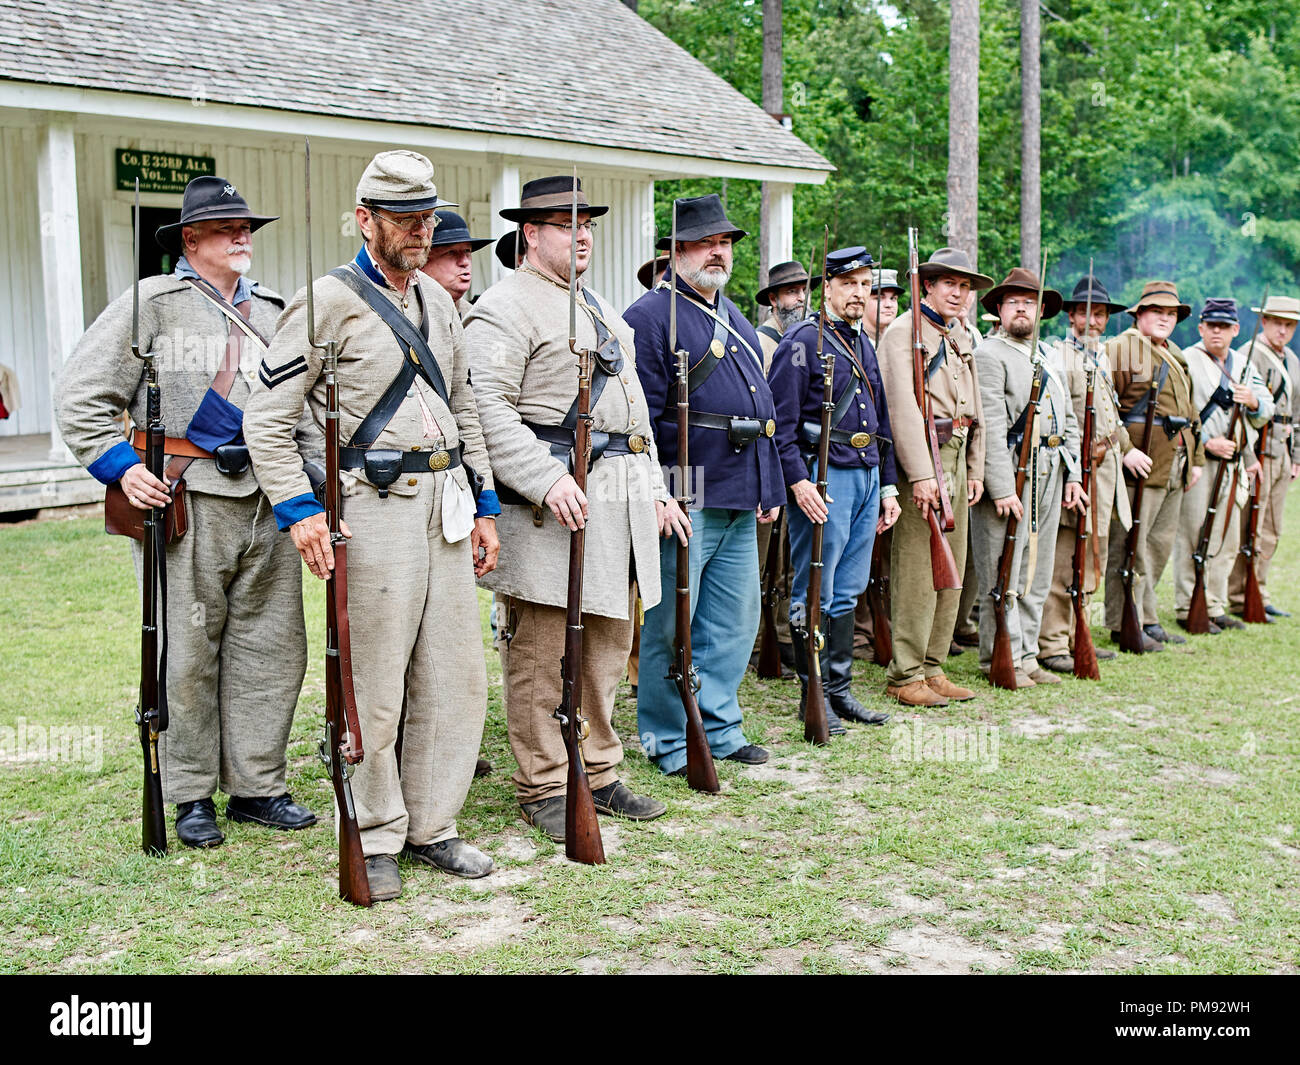 Confederate Army Uniforms Civil War